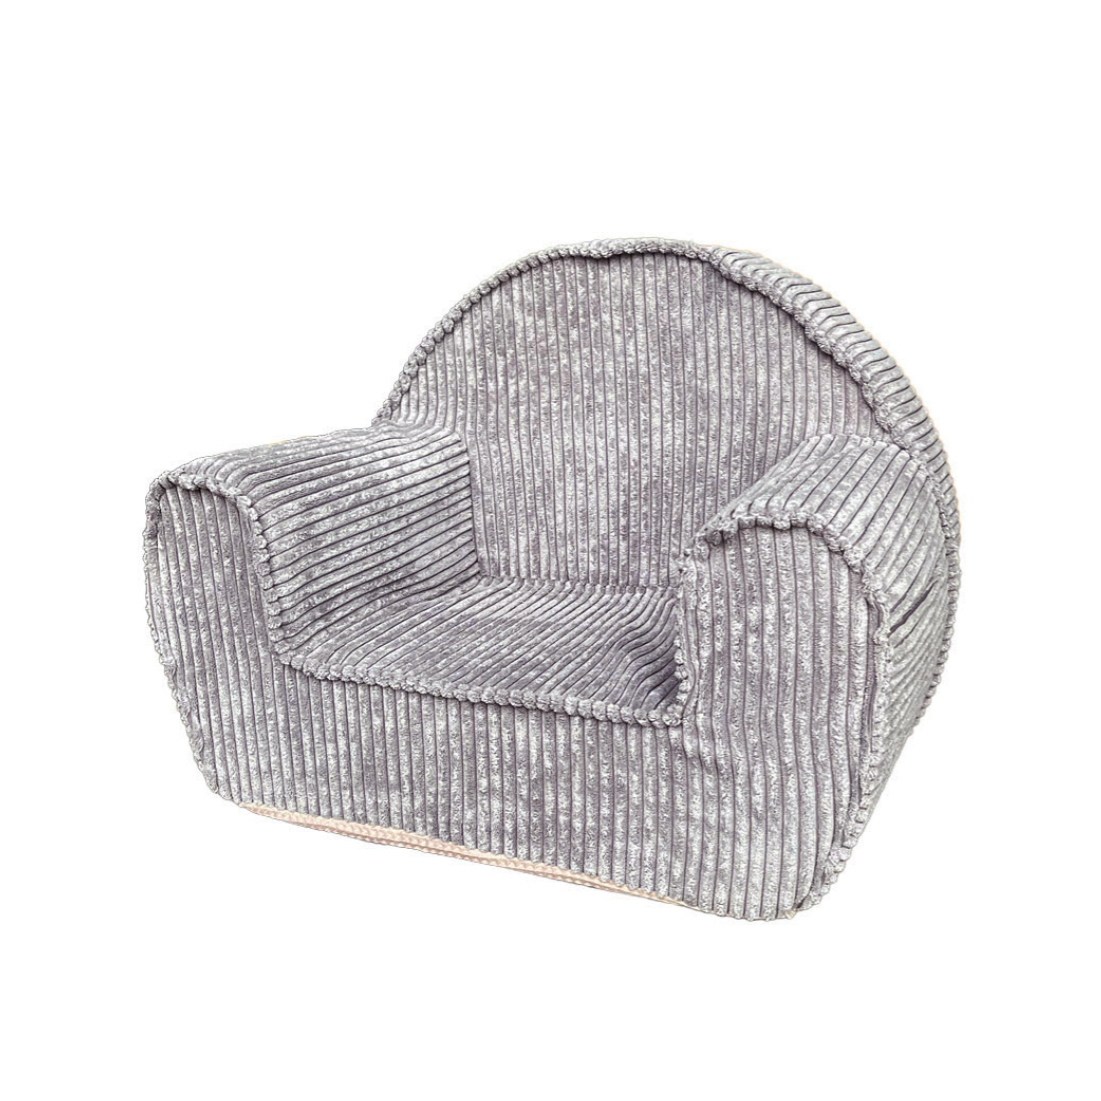 Chunky Corduroy Toddler Armchair, Grey